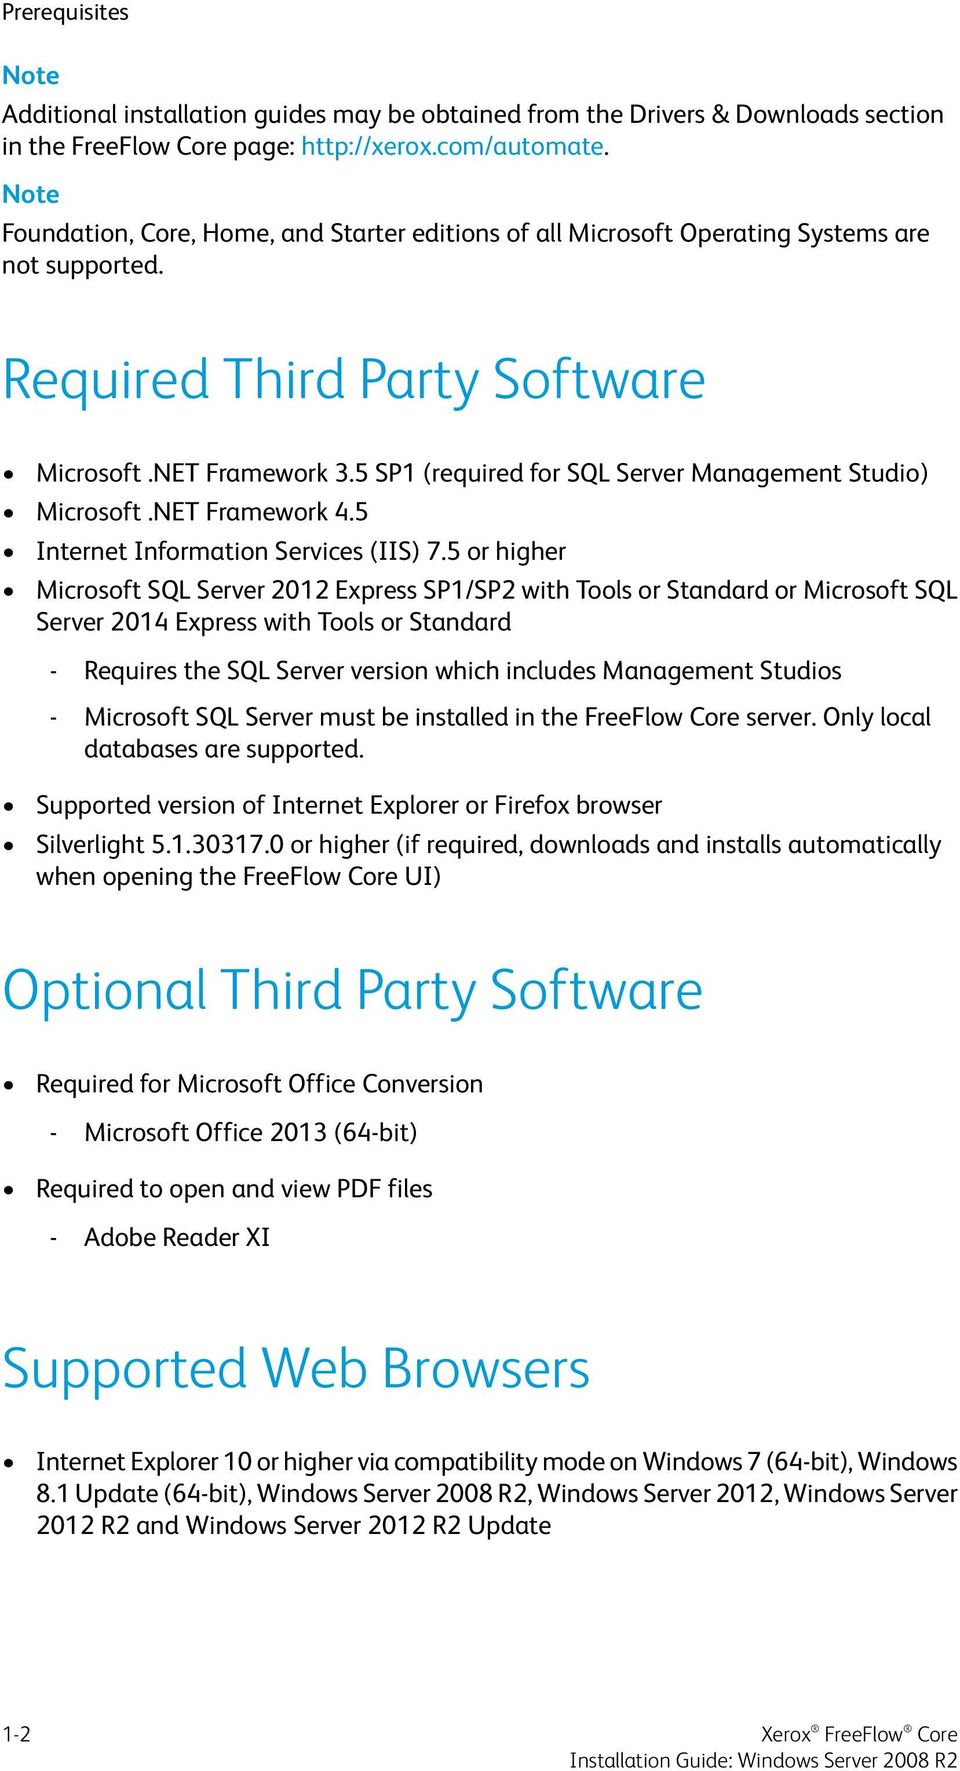 5 SP1 (required for SQL Server Management Studio) Microsoft.NET Framework 4.5 Internet Information Services (IIS) 7.